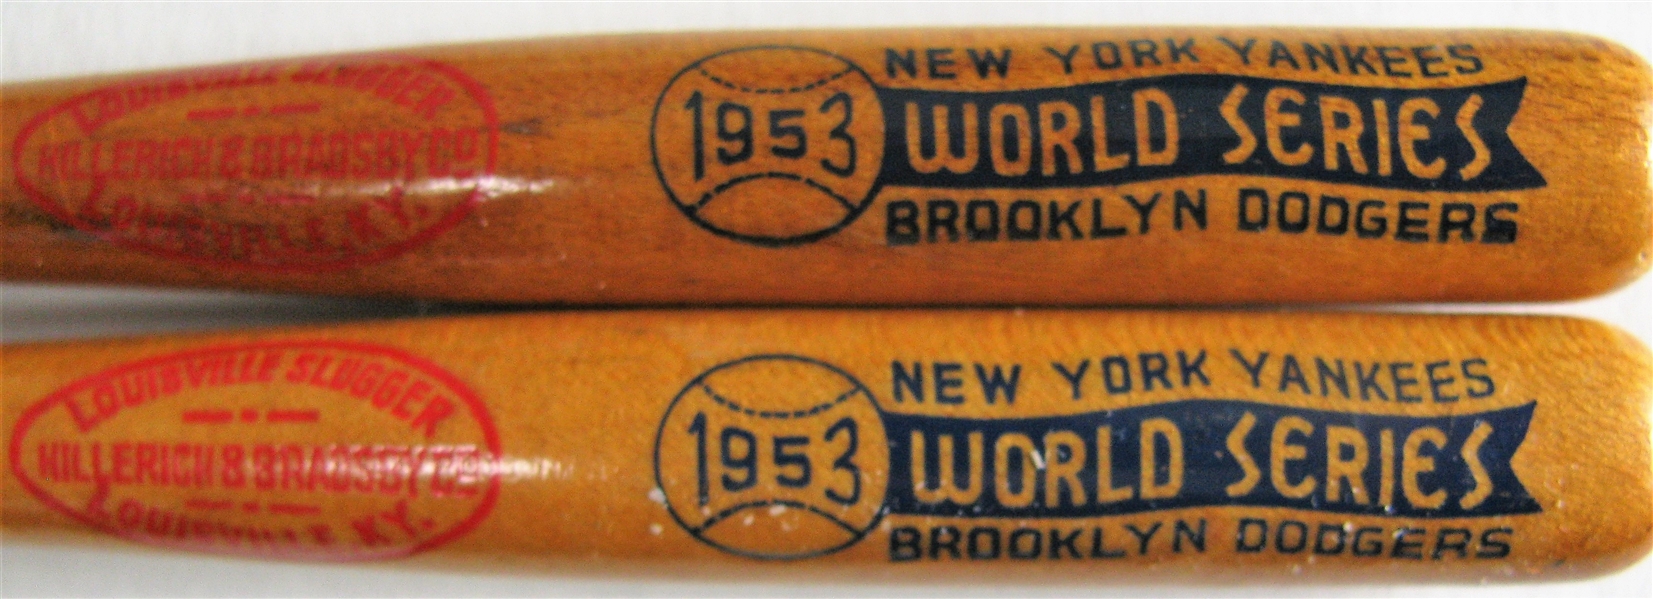 1953 WORLD SERIES BROOKLYN DODGERS vs NY YANKEES PEN AND PENCIL SET